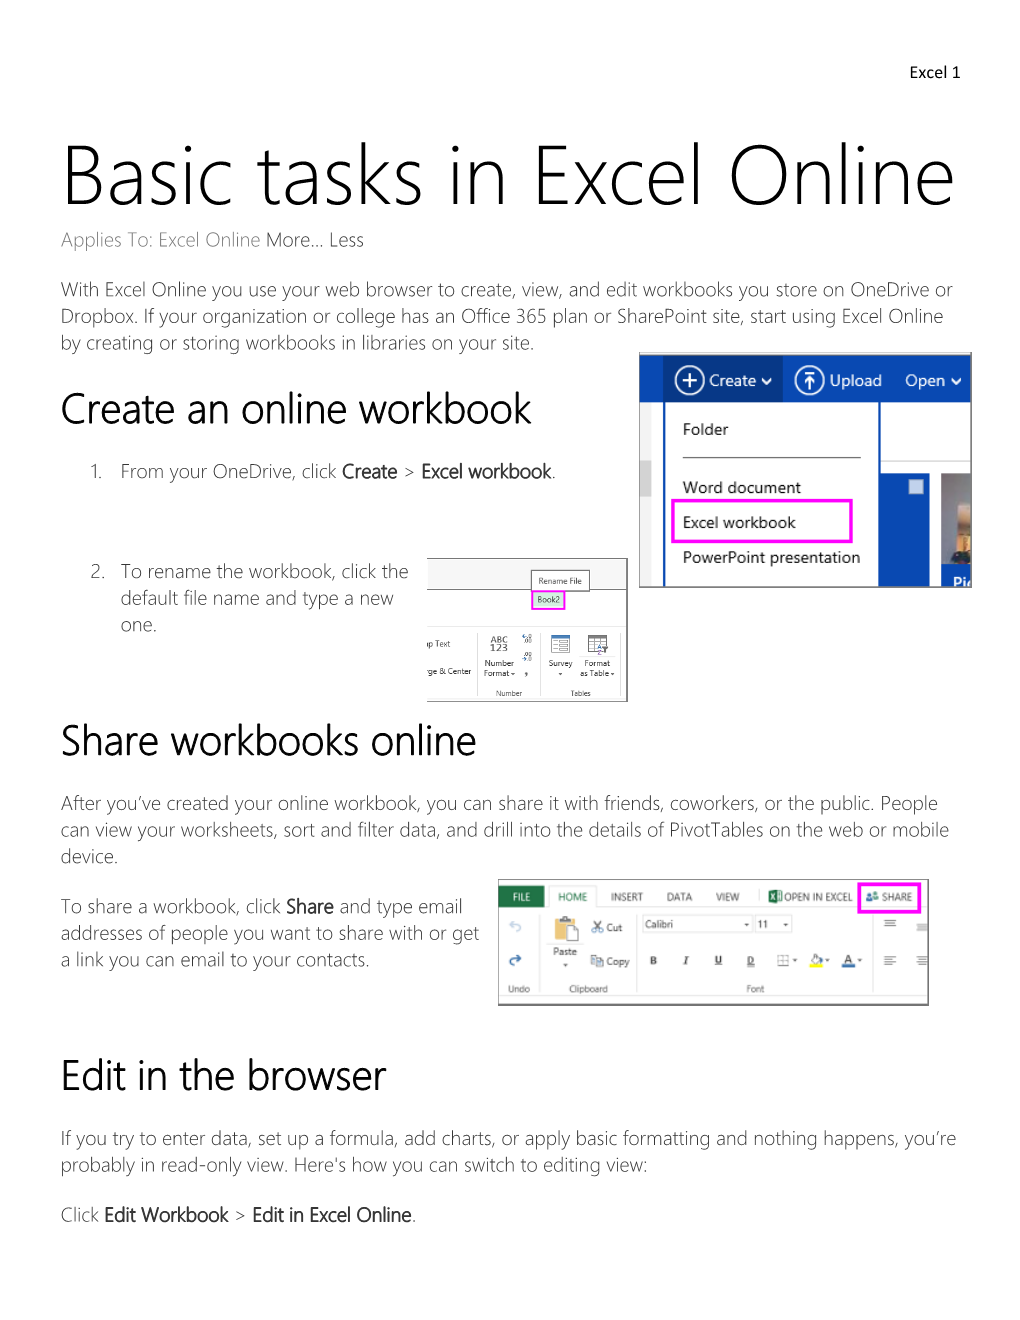 Basic Tasks in Excel Online Applies To: Excel Online More